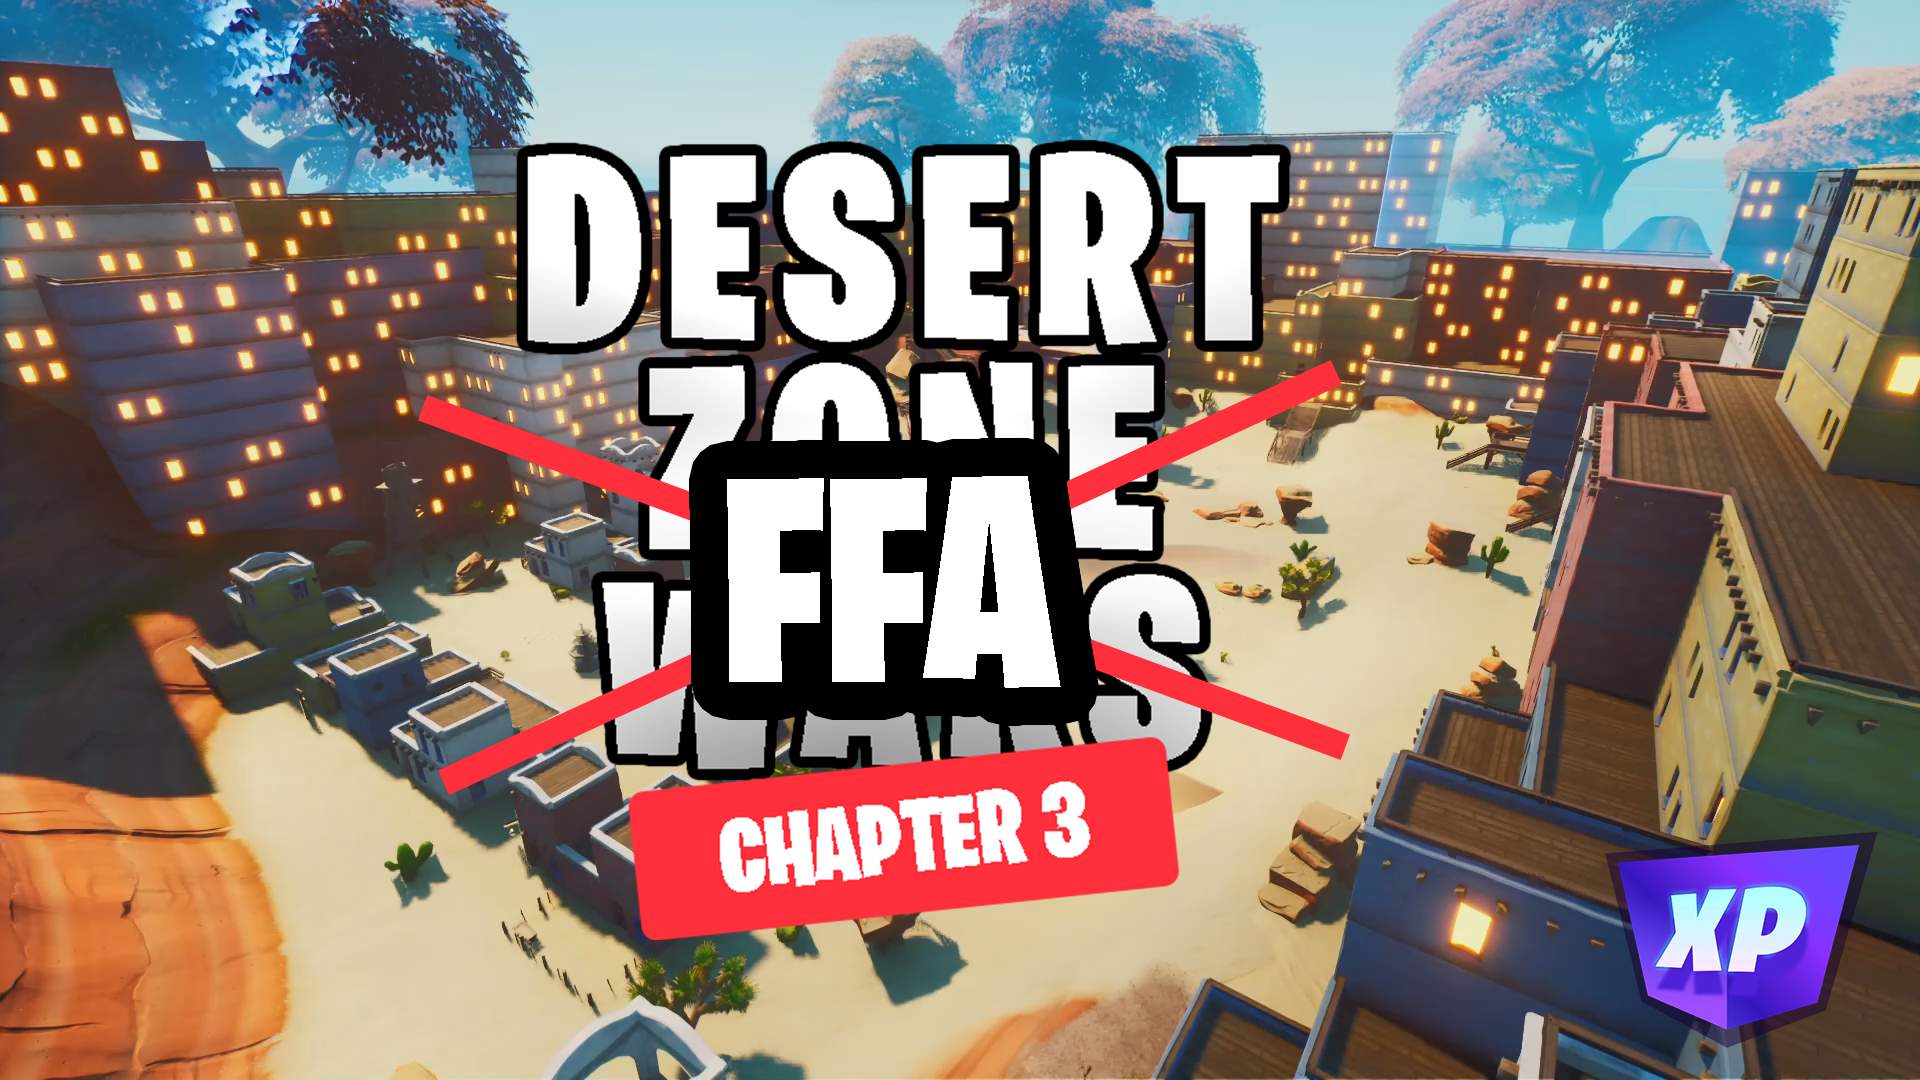 fortnite map code desert zone wars